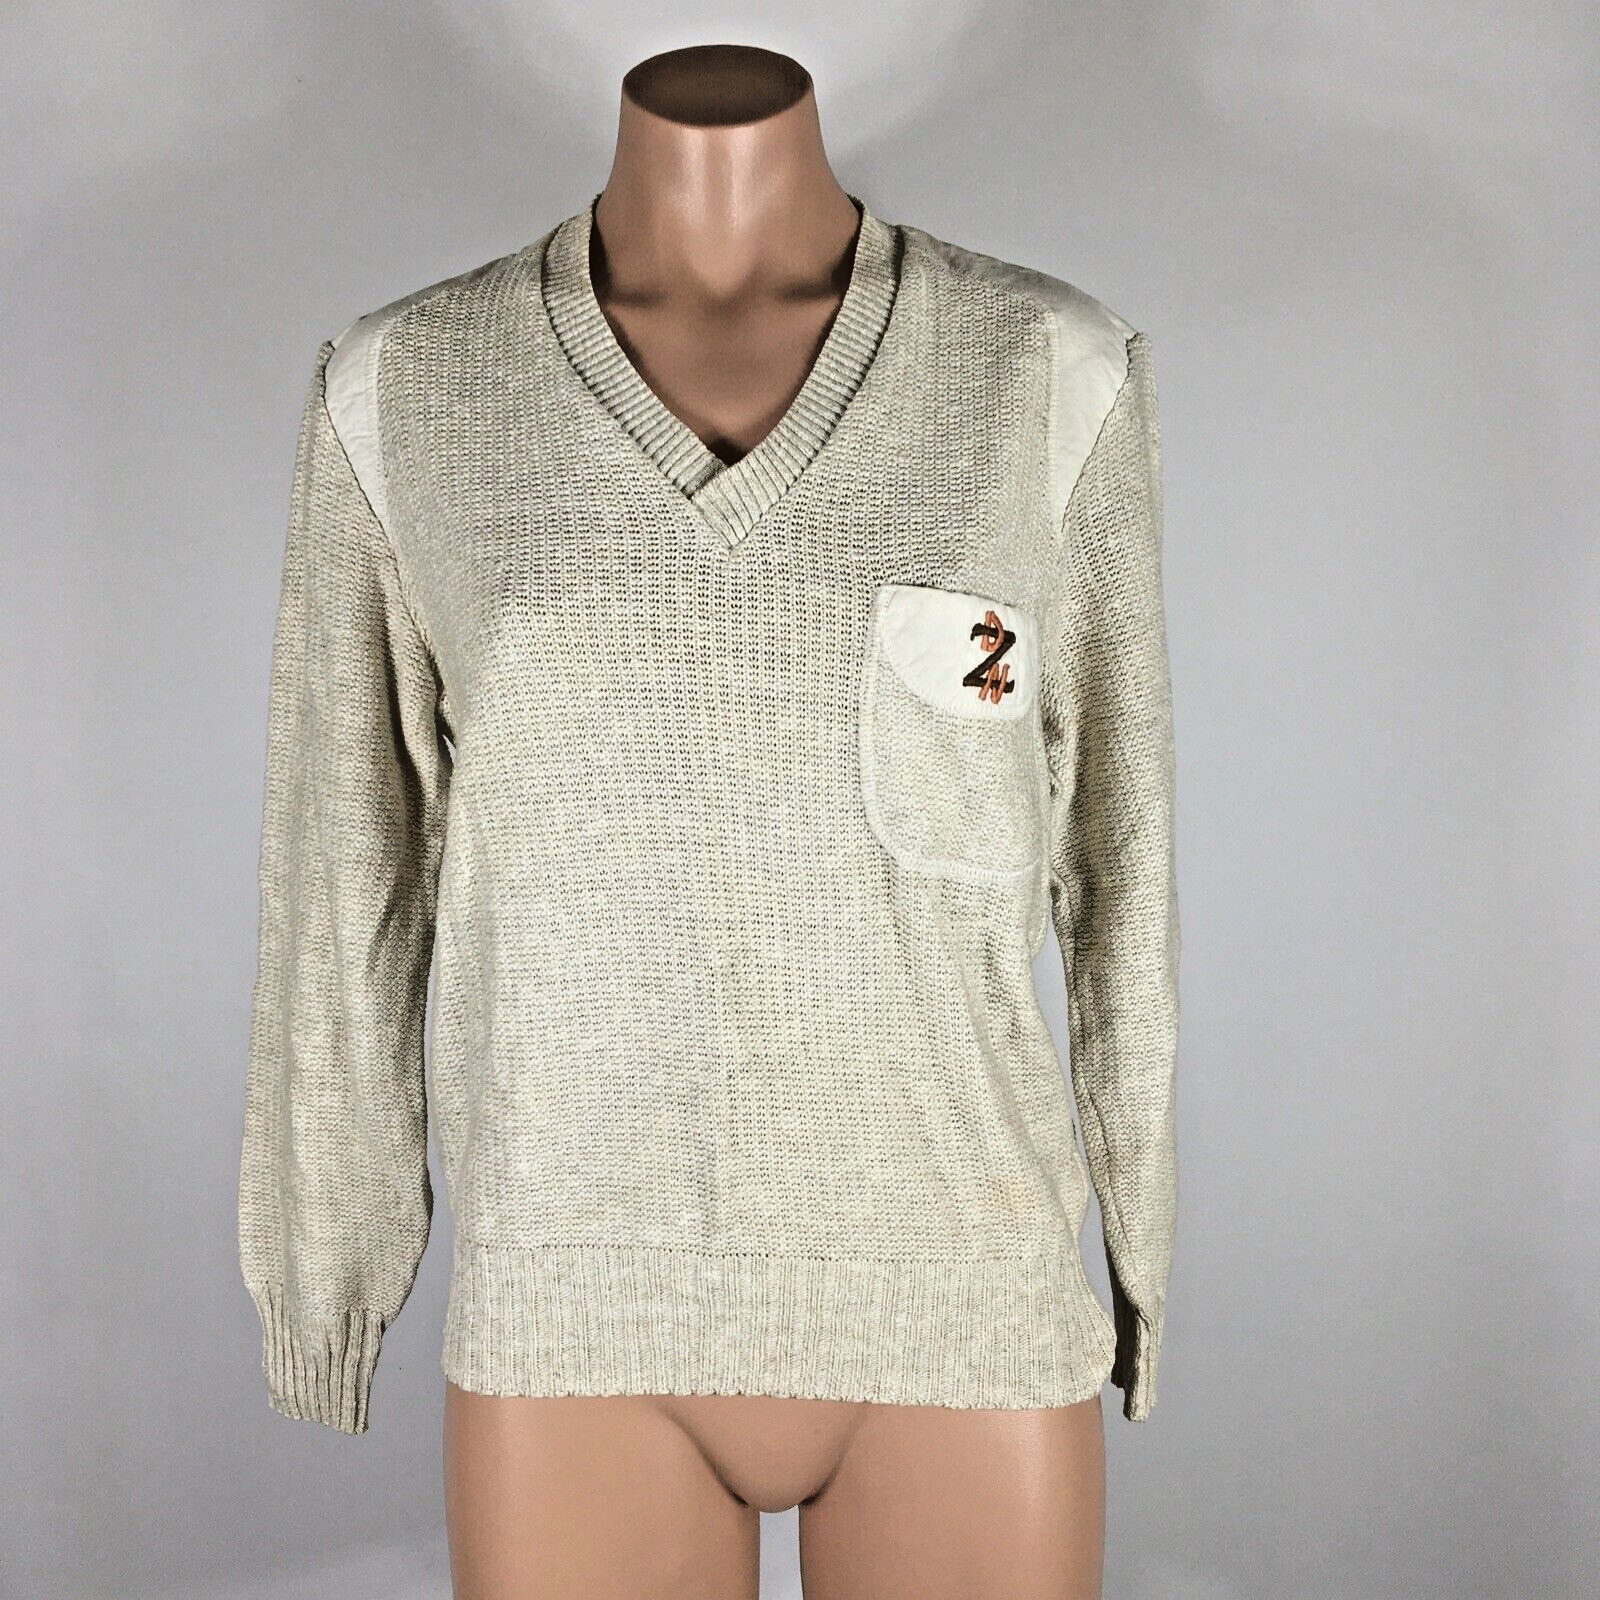 VTG 60s 70s Zeta Delta ZDN sorority Sweater Knit Complice College Varsity Greek